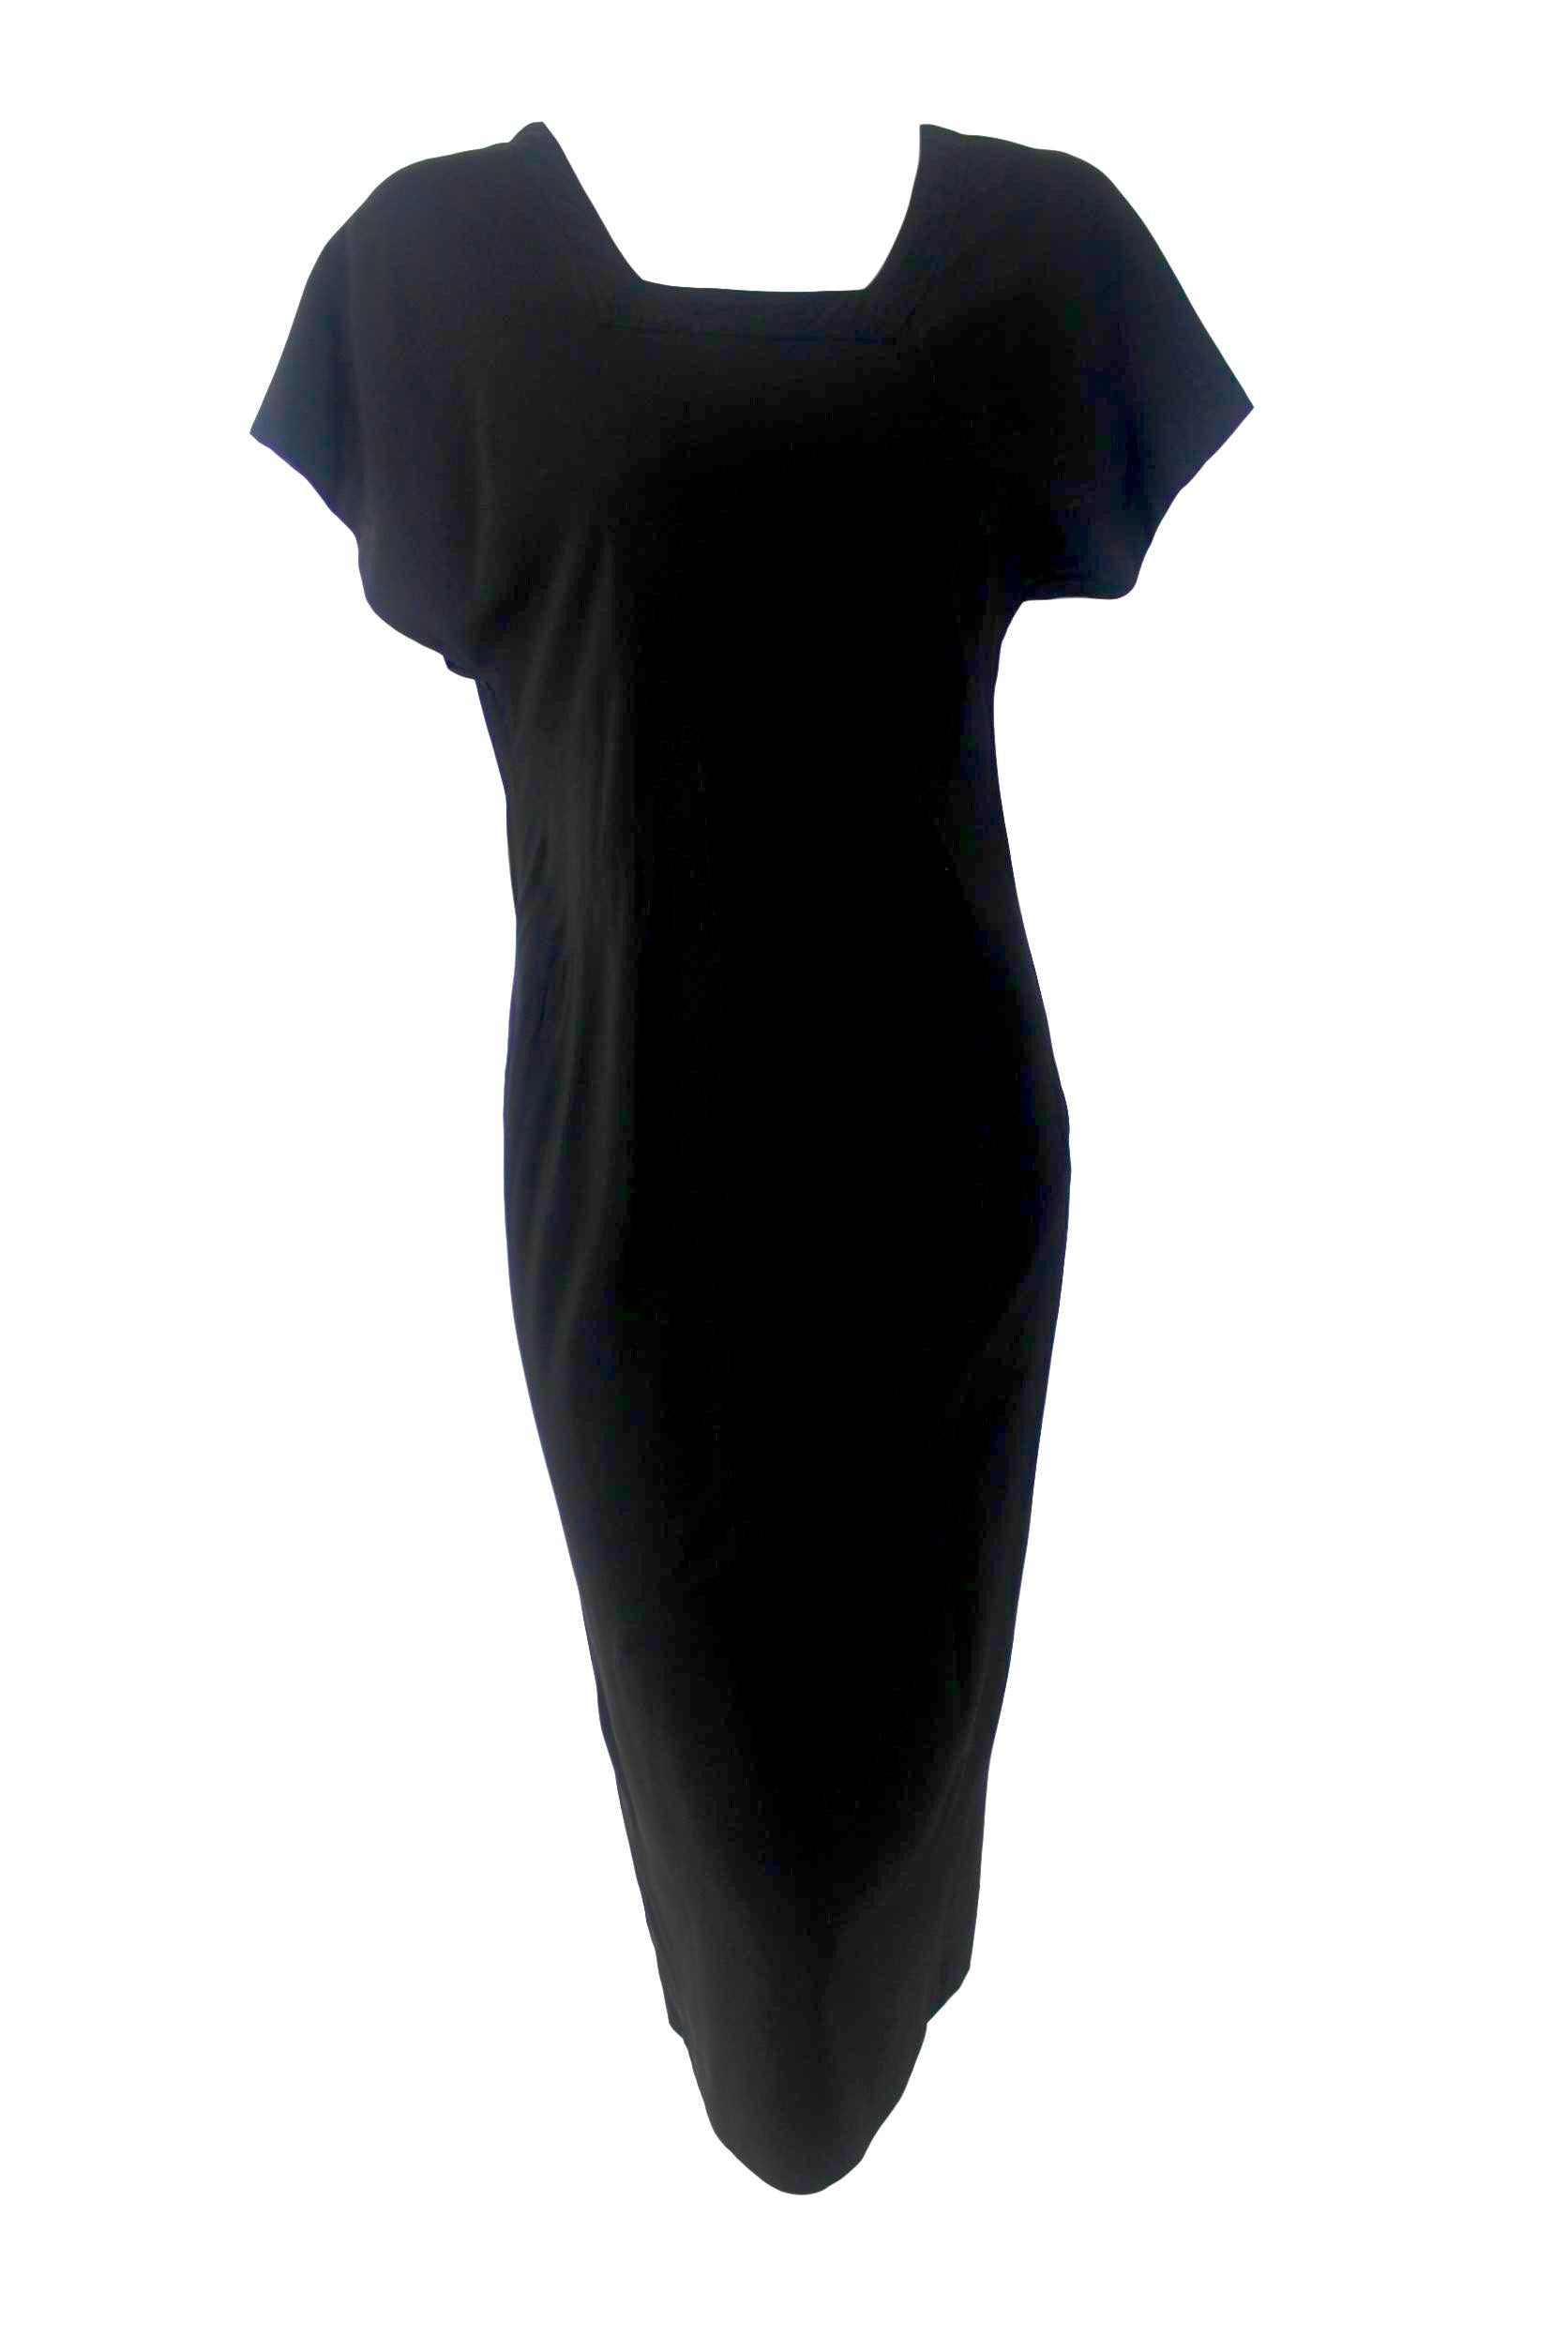 Women's John Galliano Black Bias Cut Silk Dress Made in England Label For Sale